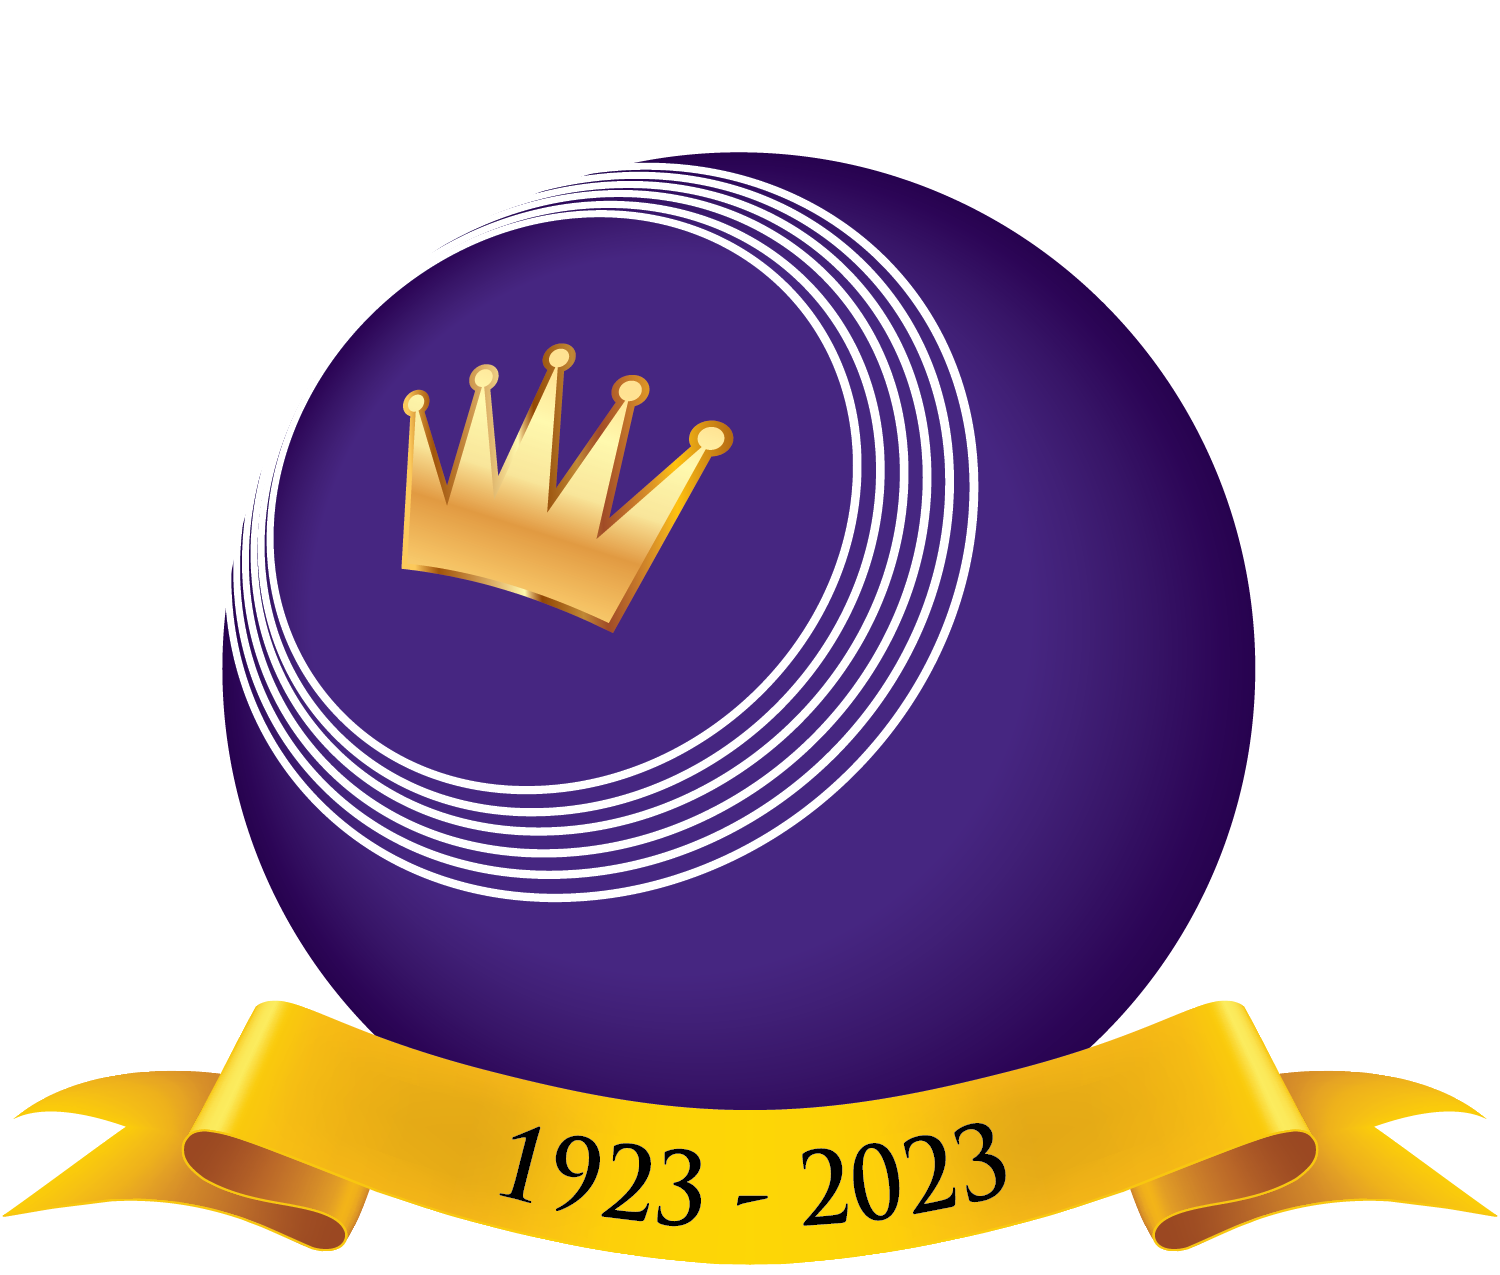 Royal Lawn Bowling Club